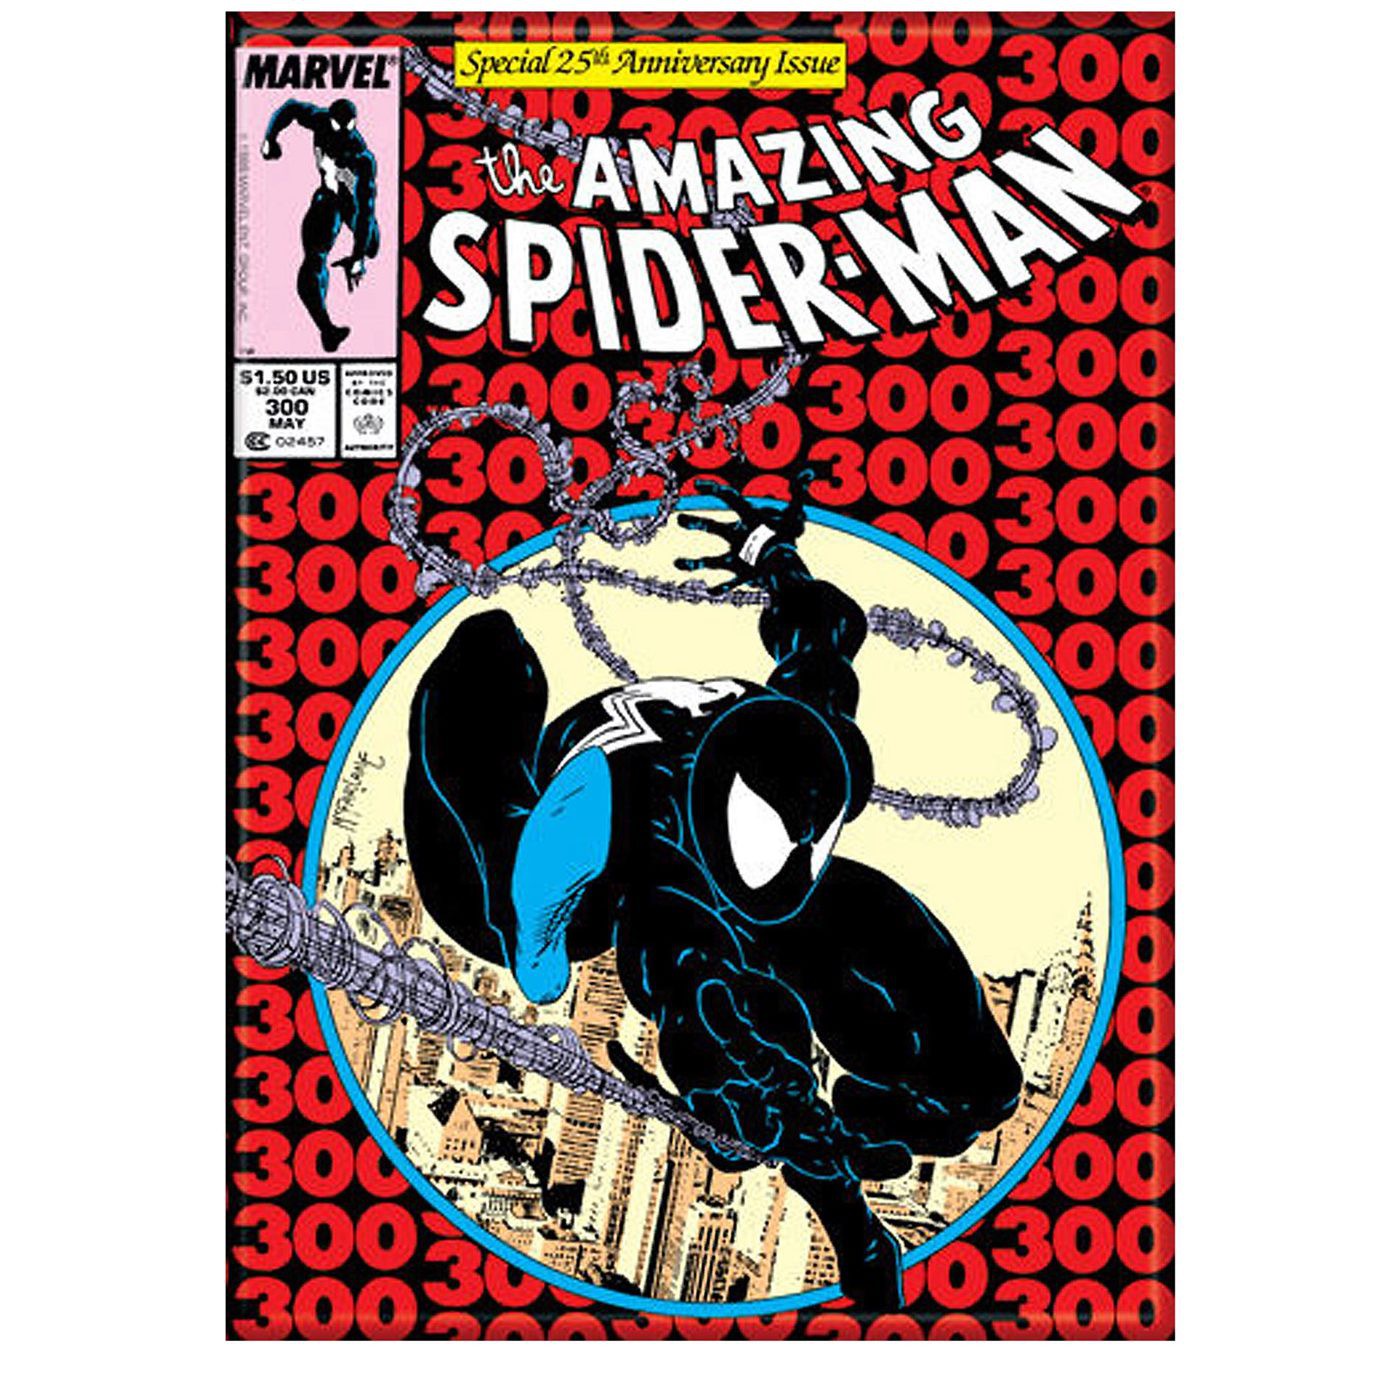 Amazing Spiderman #300 Cover Magnet